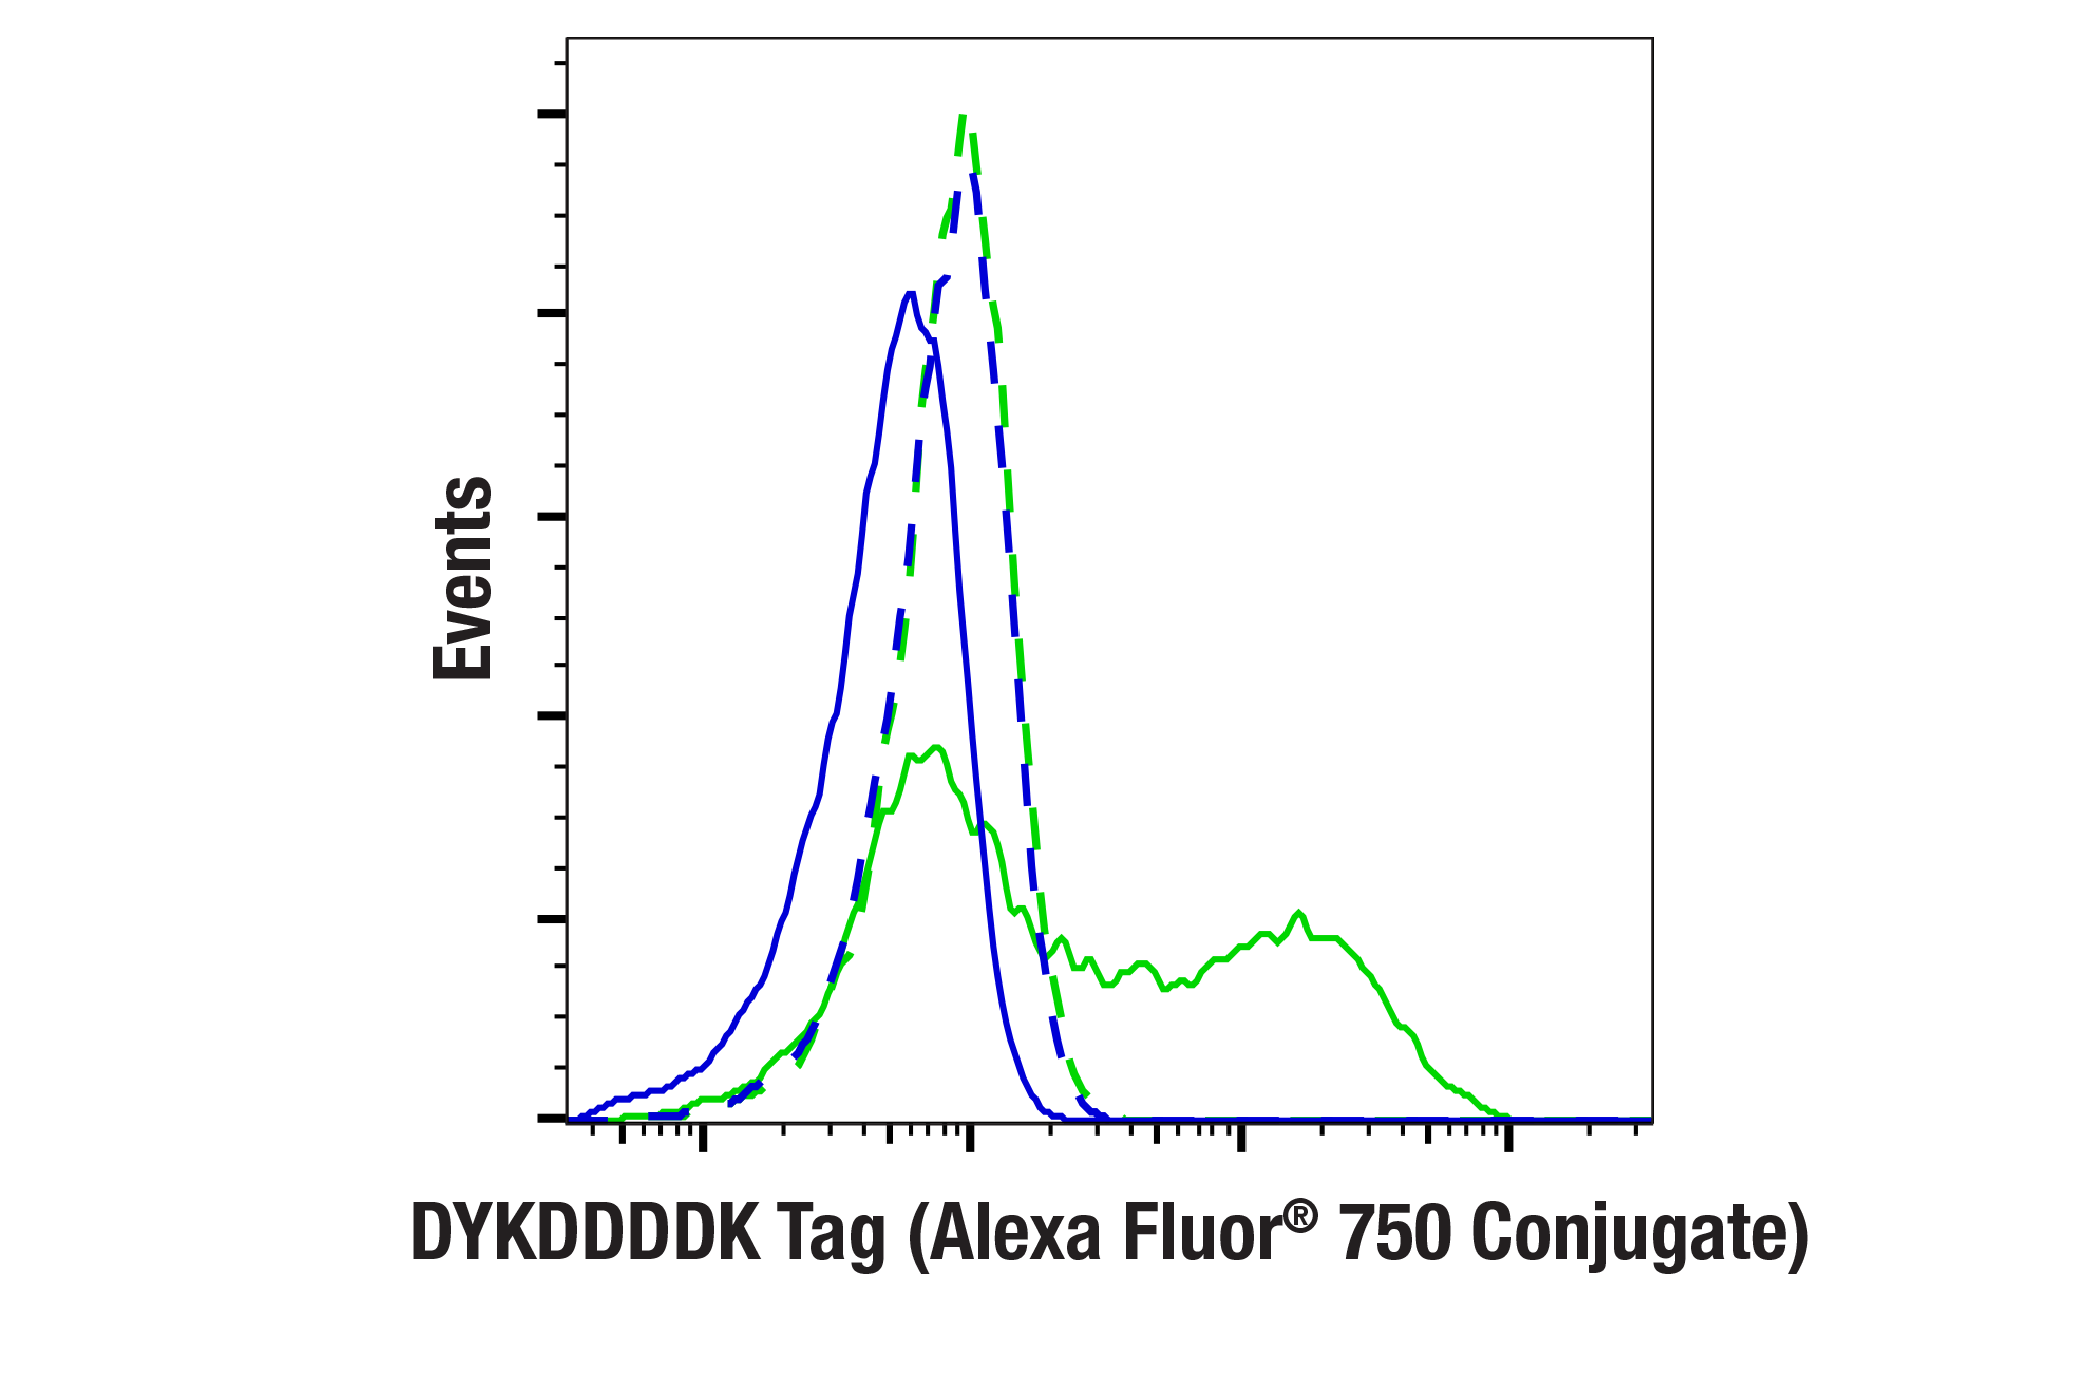 Flow Cytometry Image 1: DYKDDDDK Tag (D6W5B) Rabbit mAb (Binds to same epitope as Sigma-Aldrich Anti-FLAG M2 Antibody) (Alexa Fluor® 750 Conjugate)